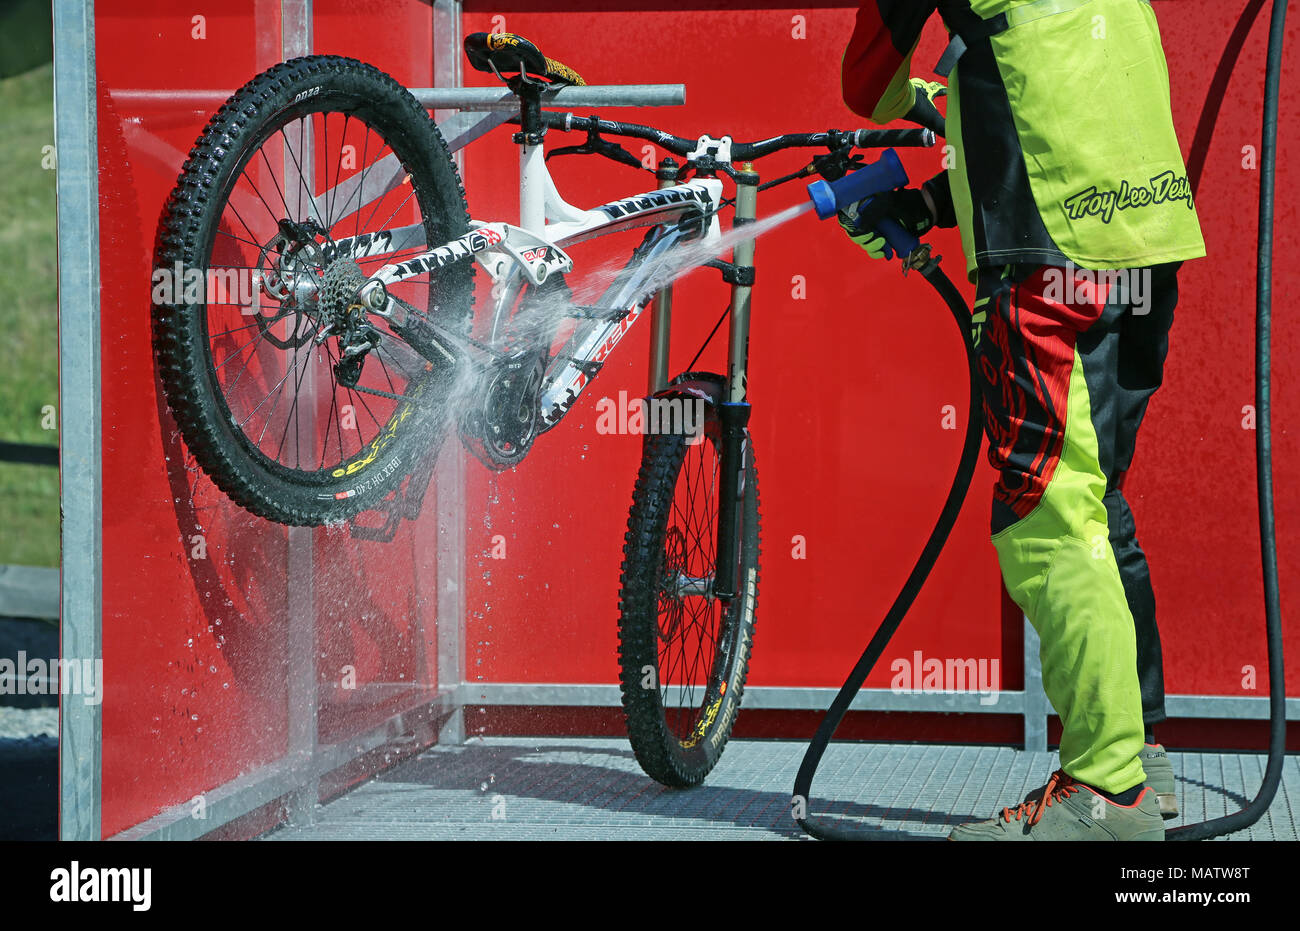 Man washing his Mountain Bike after Race Stock Photo